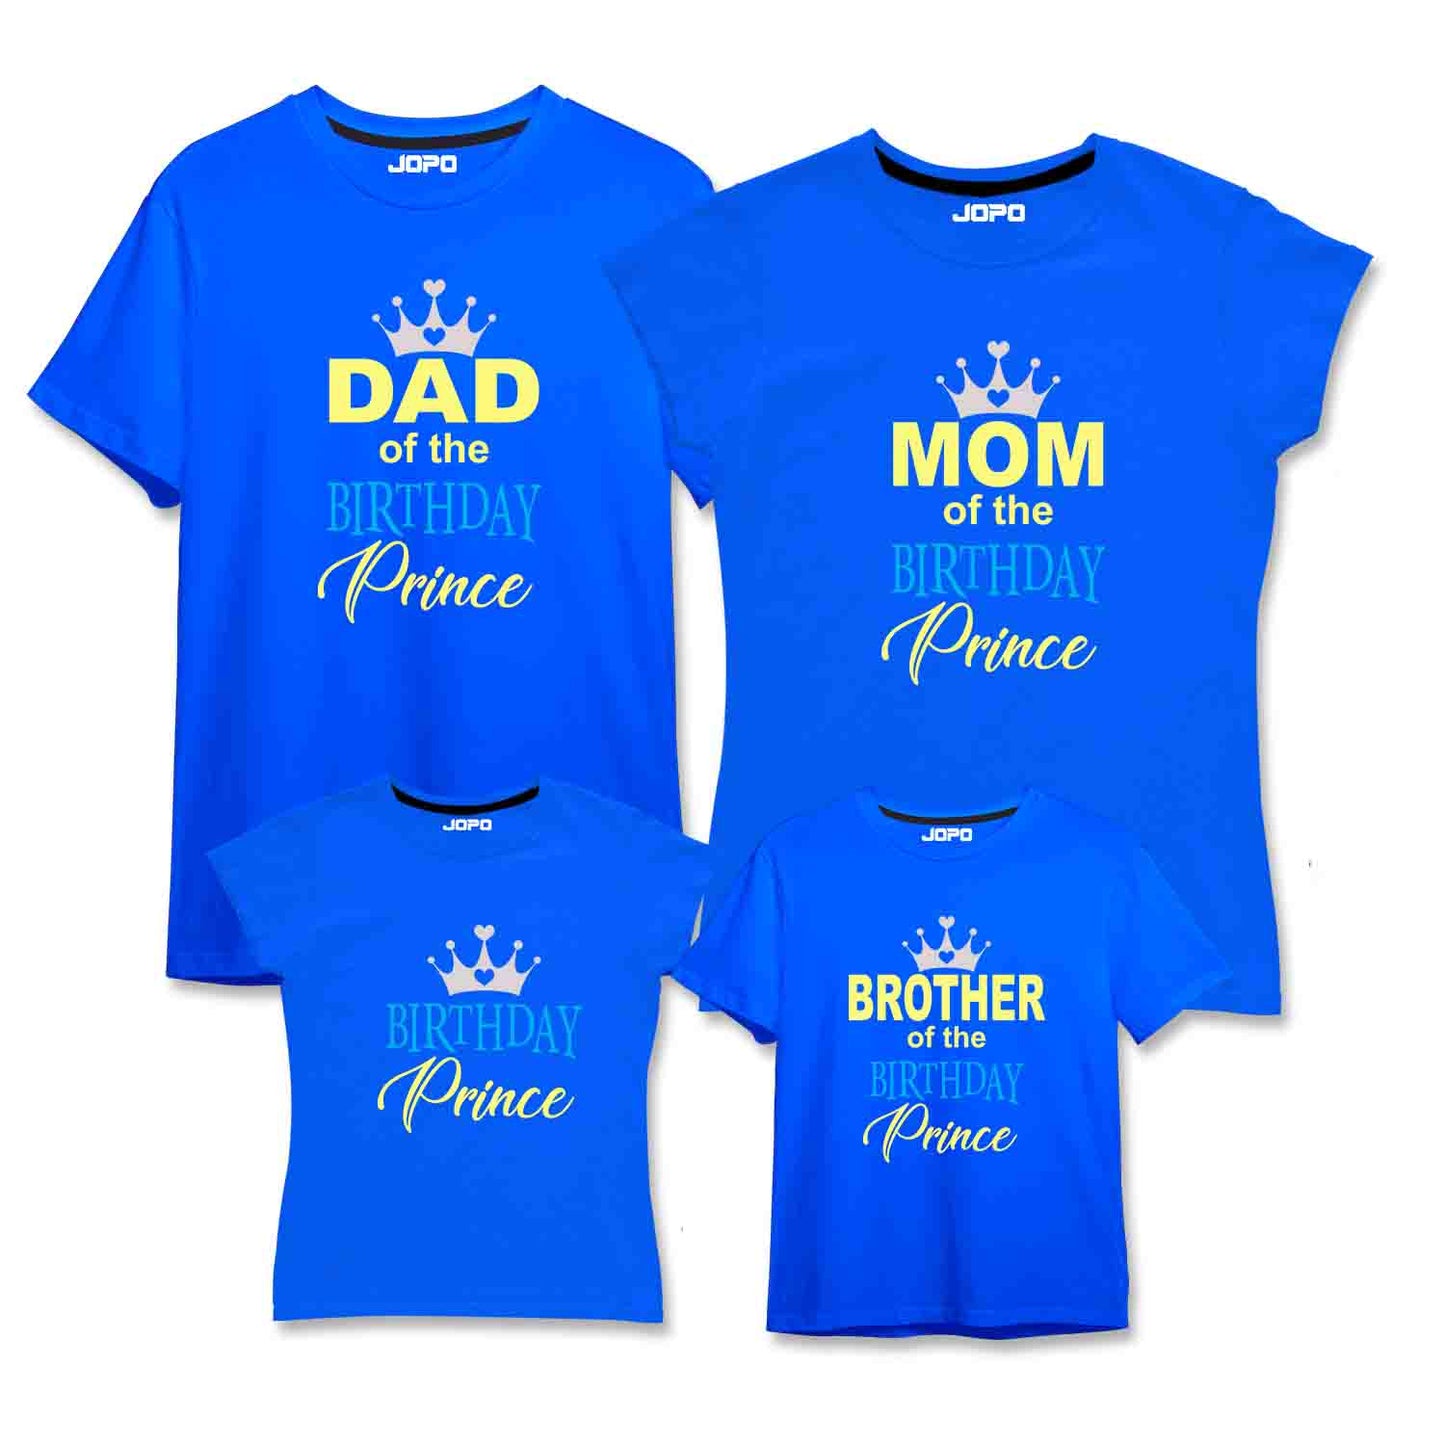 Birthday Prince Matching Family Tshirts Set